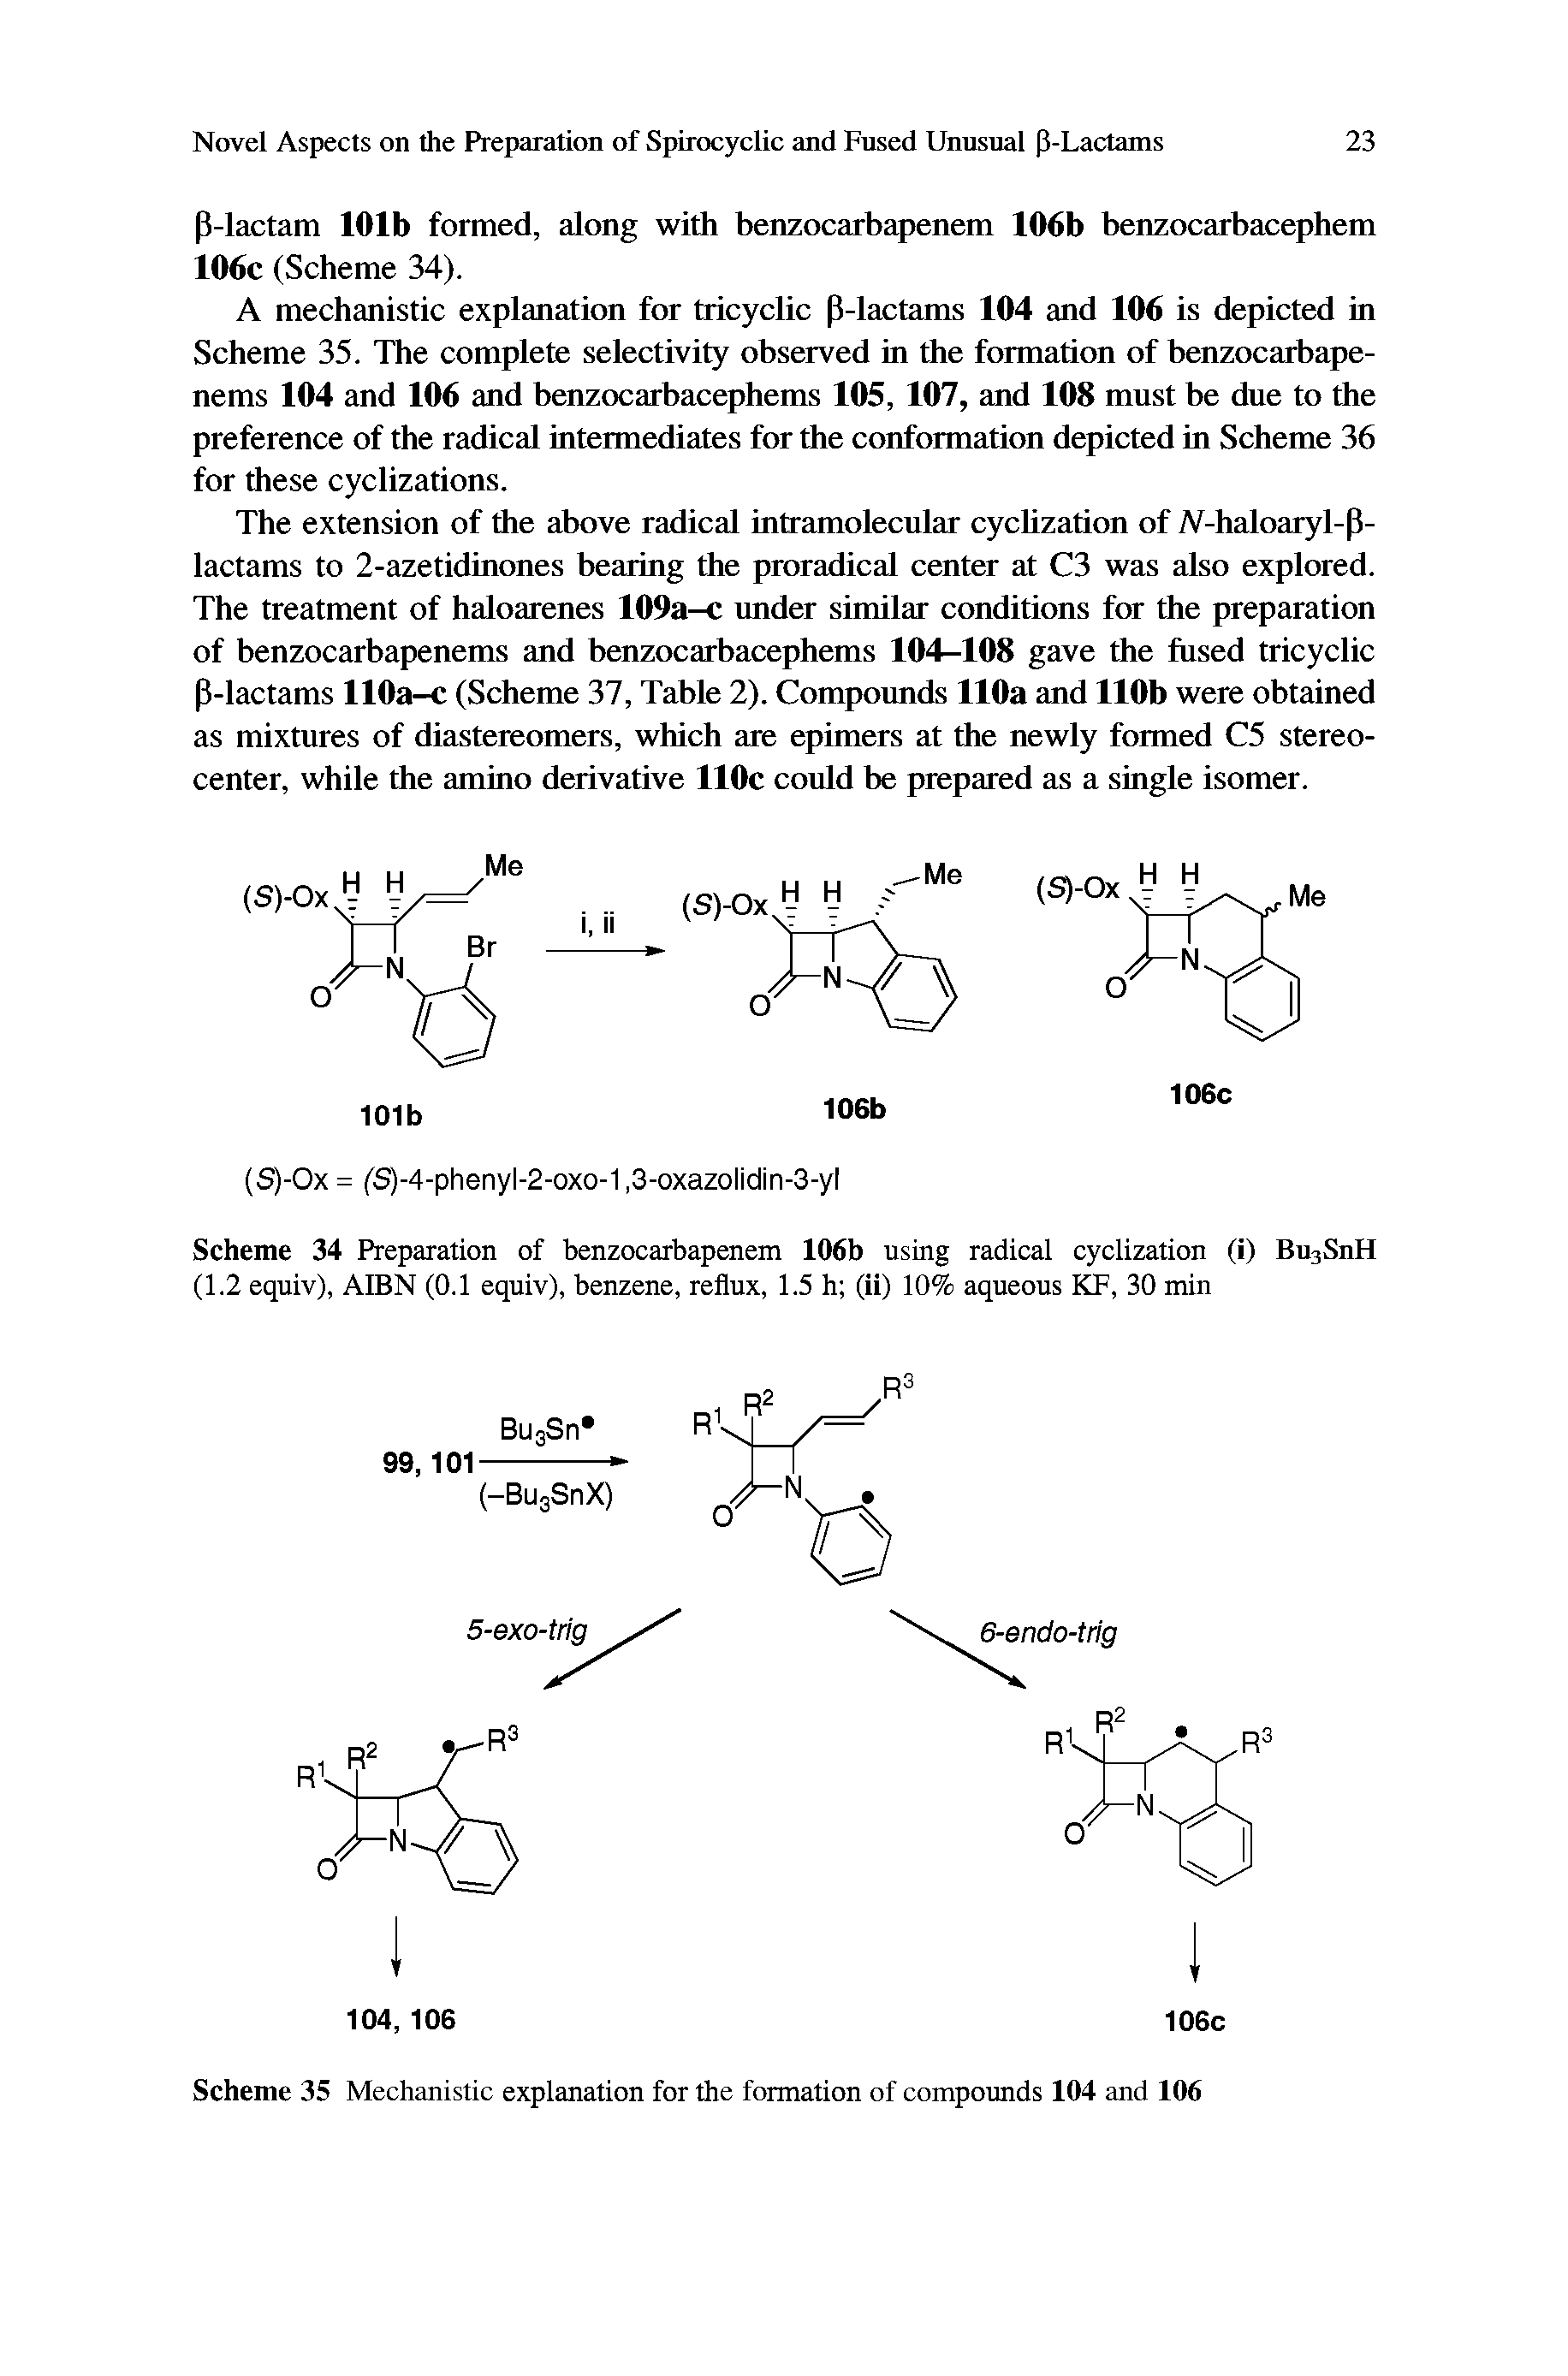 Scheme 34 Preparation of benzocarbapenem 106b using radical cyclization (i) Bu3SnH (1.2 equiv), AIBN (0.1 equiv), benzene, reflux, 1.5 h (ii) 10% aqueous KF, 30 min...